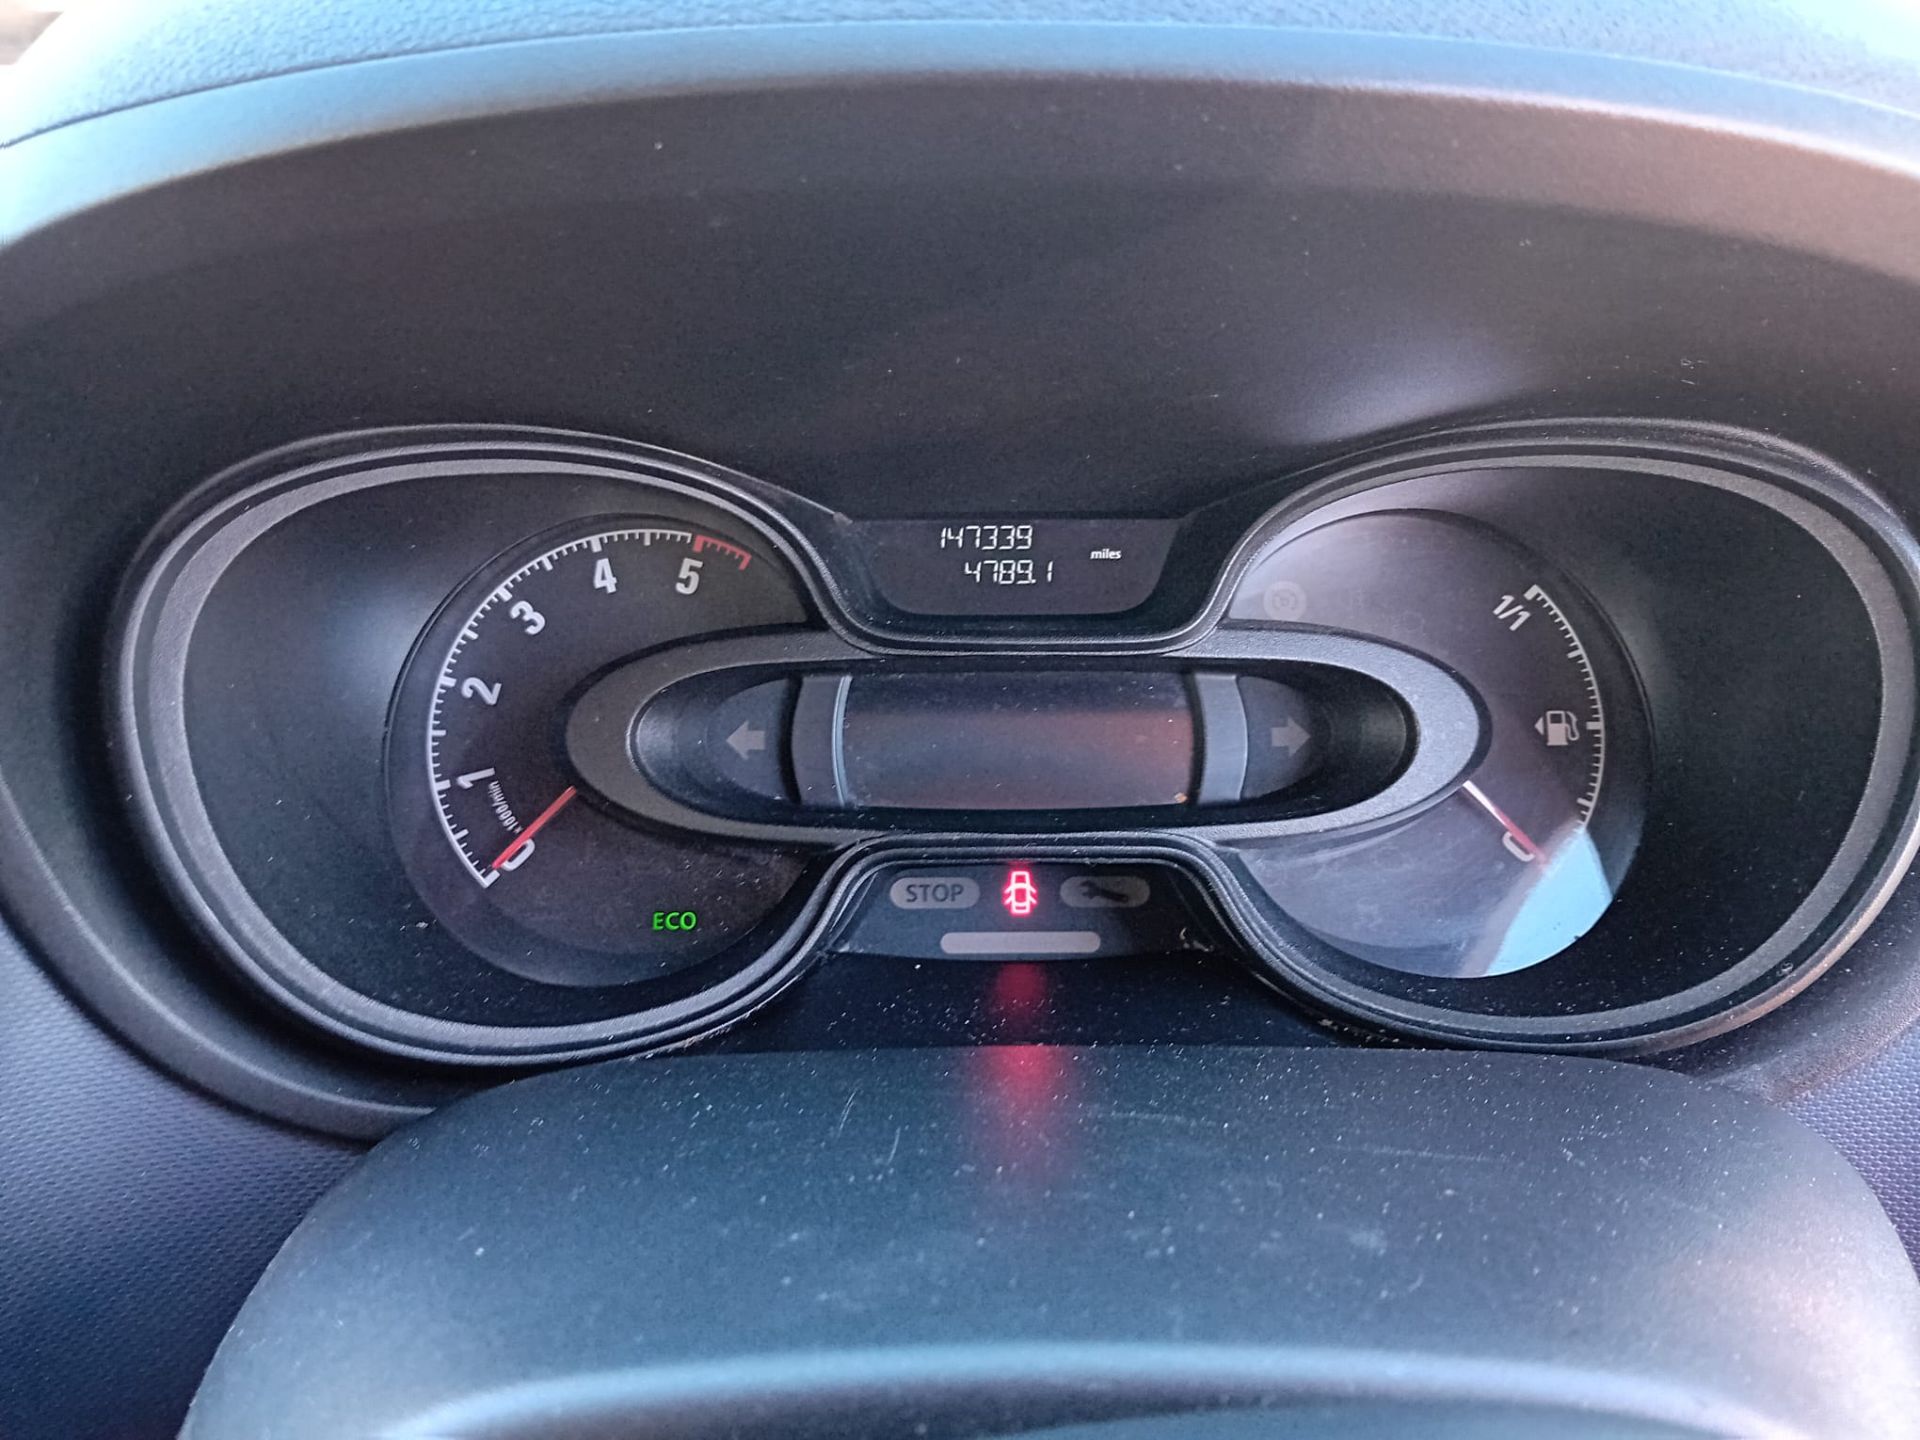 Vauxhall Vivaro 9 Seater - Image 8 of 12